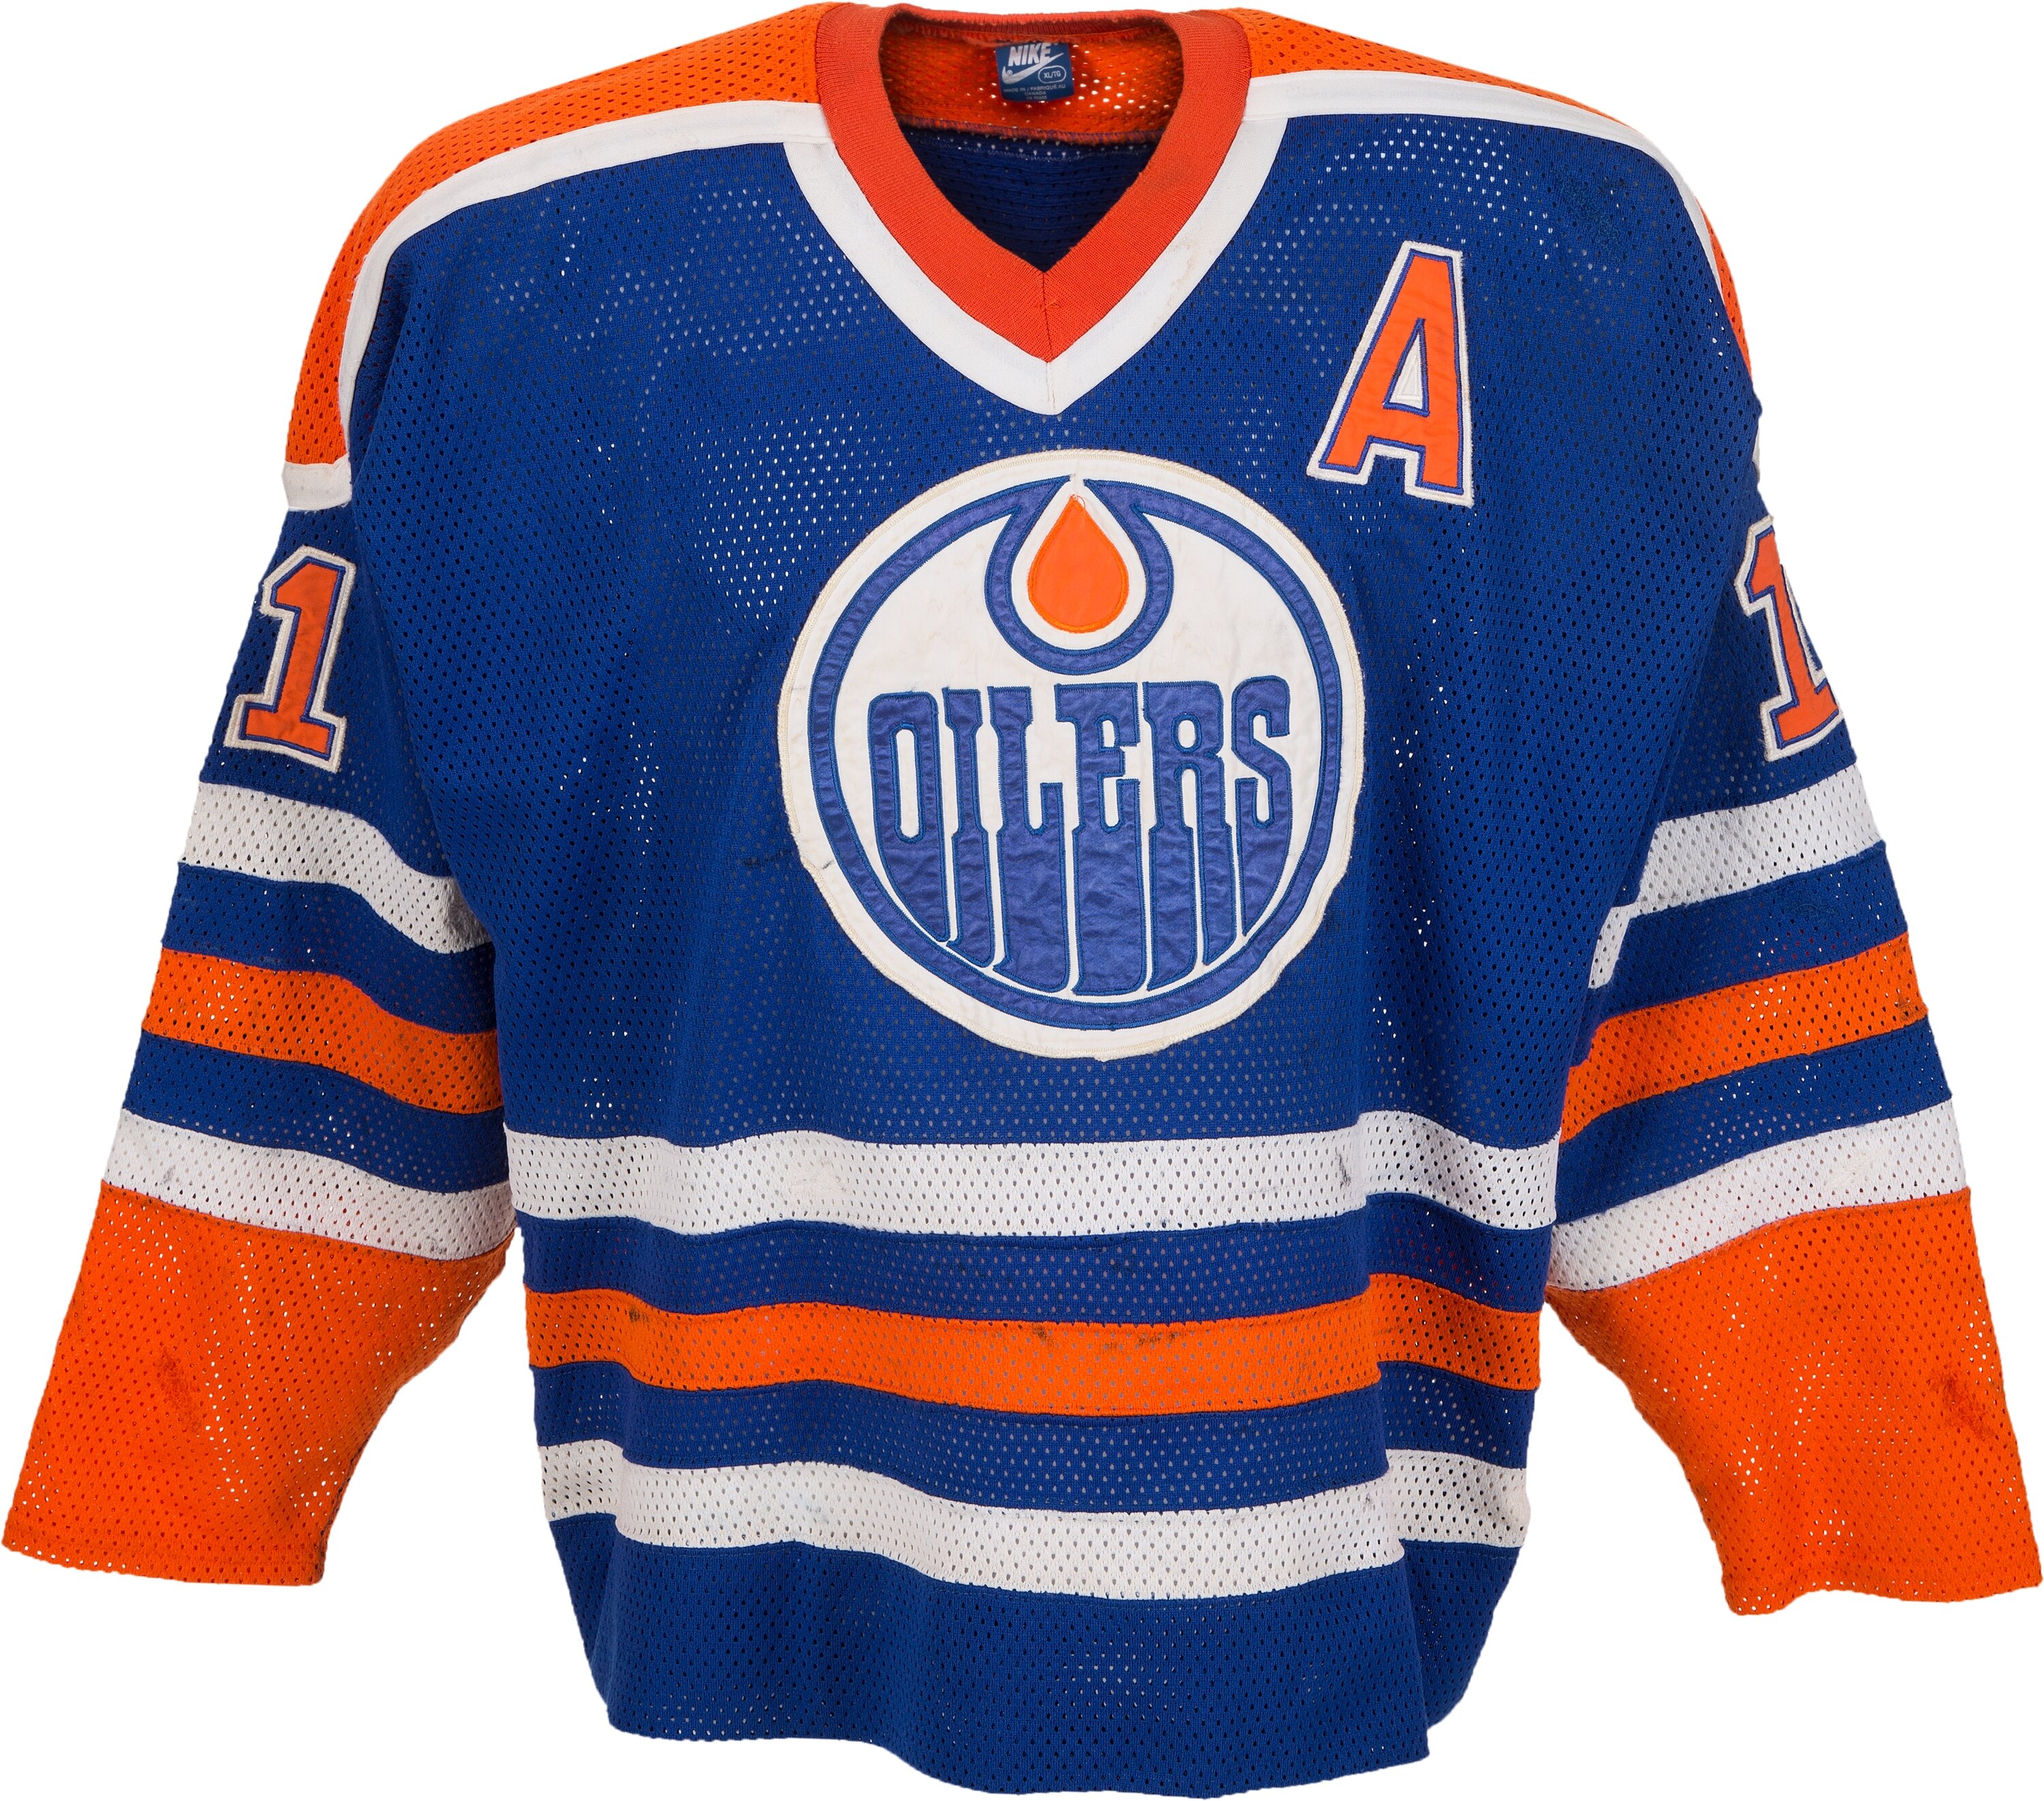 Mid 1980's Mark Messier Game Worn Edmonton Oilers Jersey